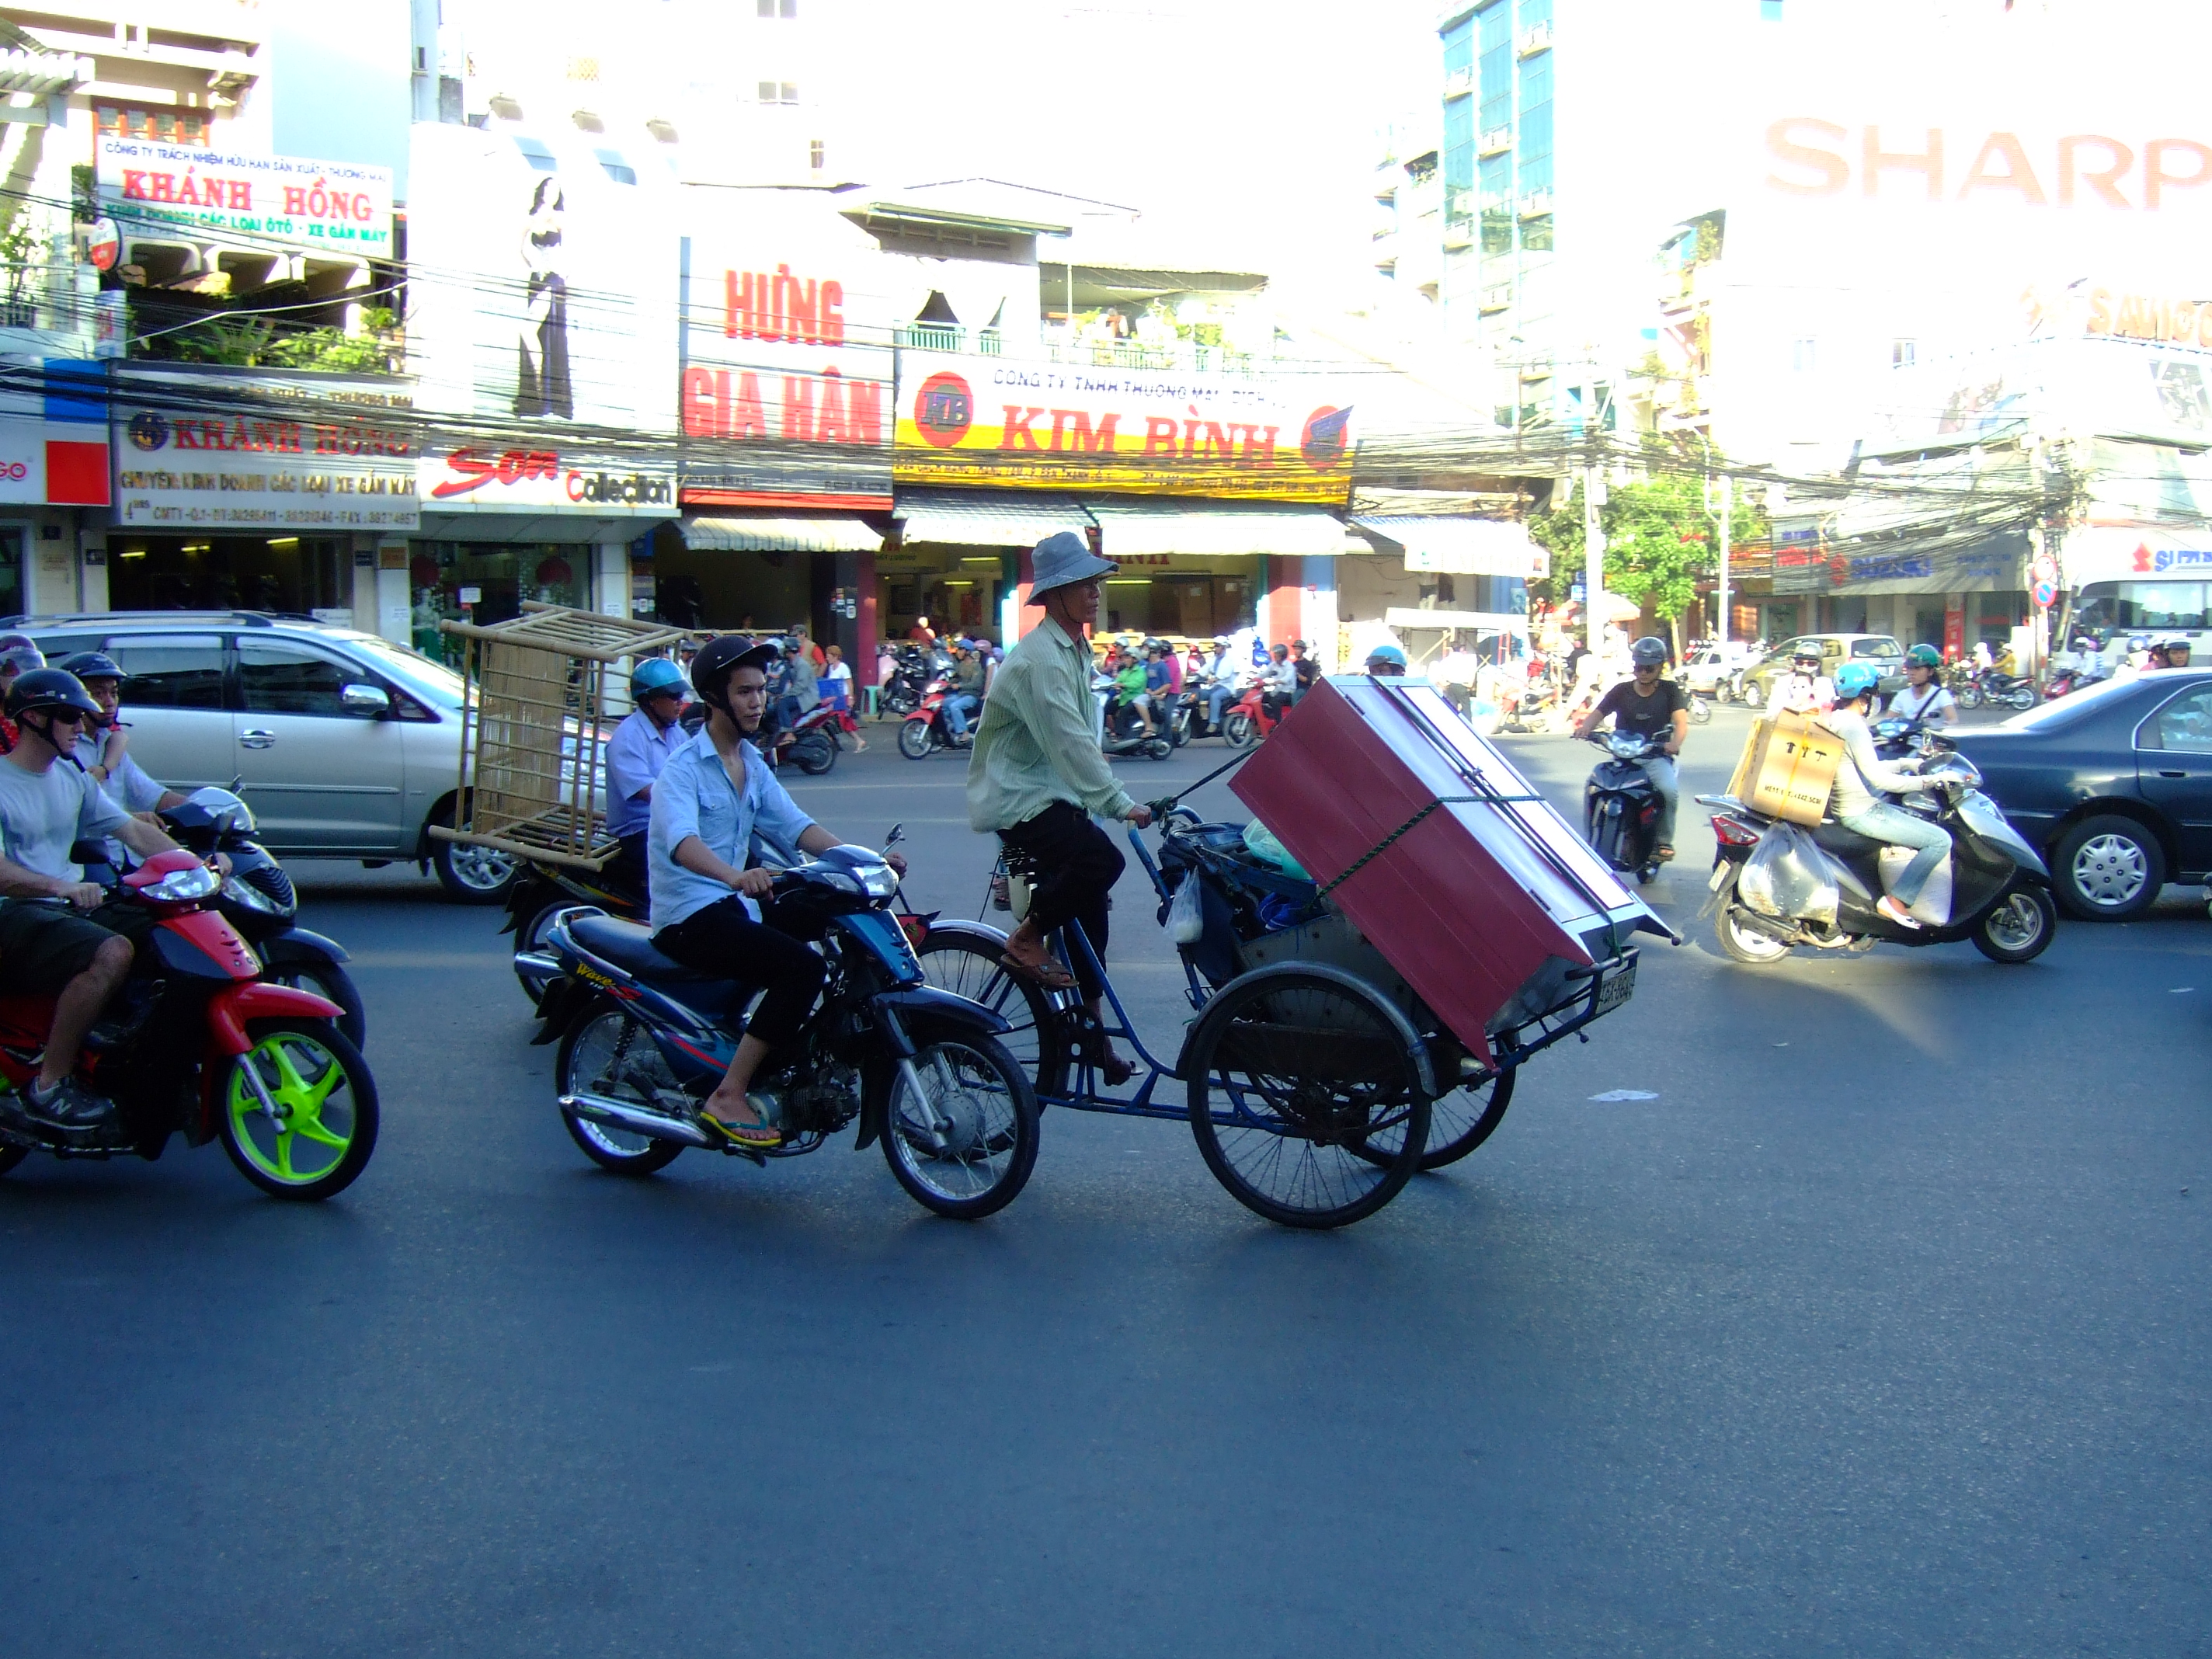 Vietnam Ho Chi Minh City motorbike street scenes Feb 2009 112